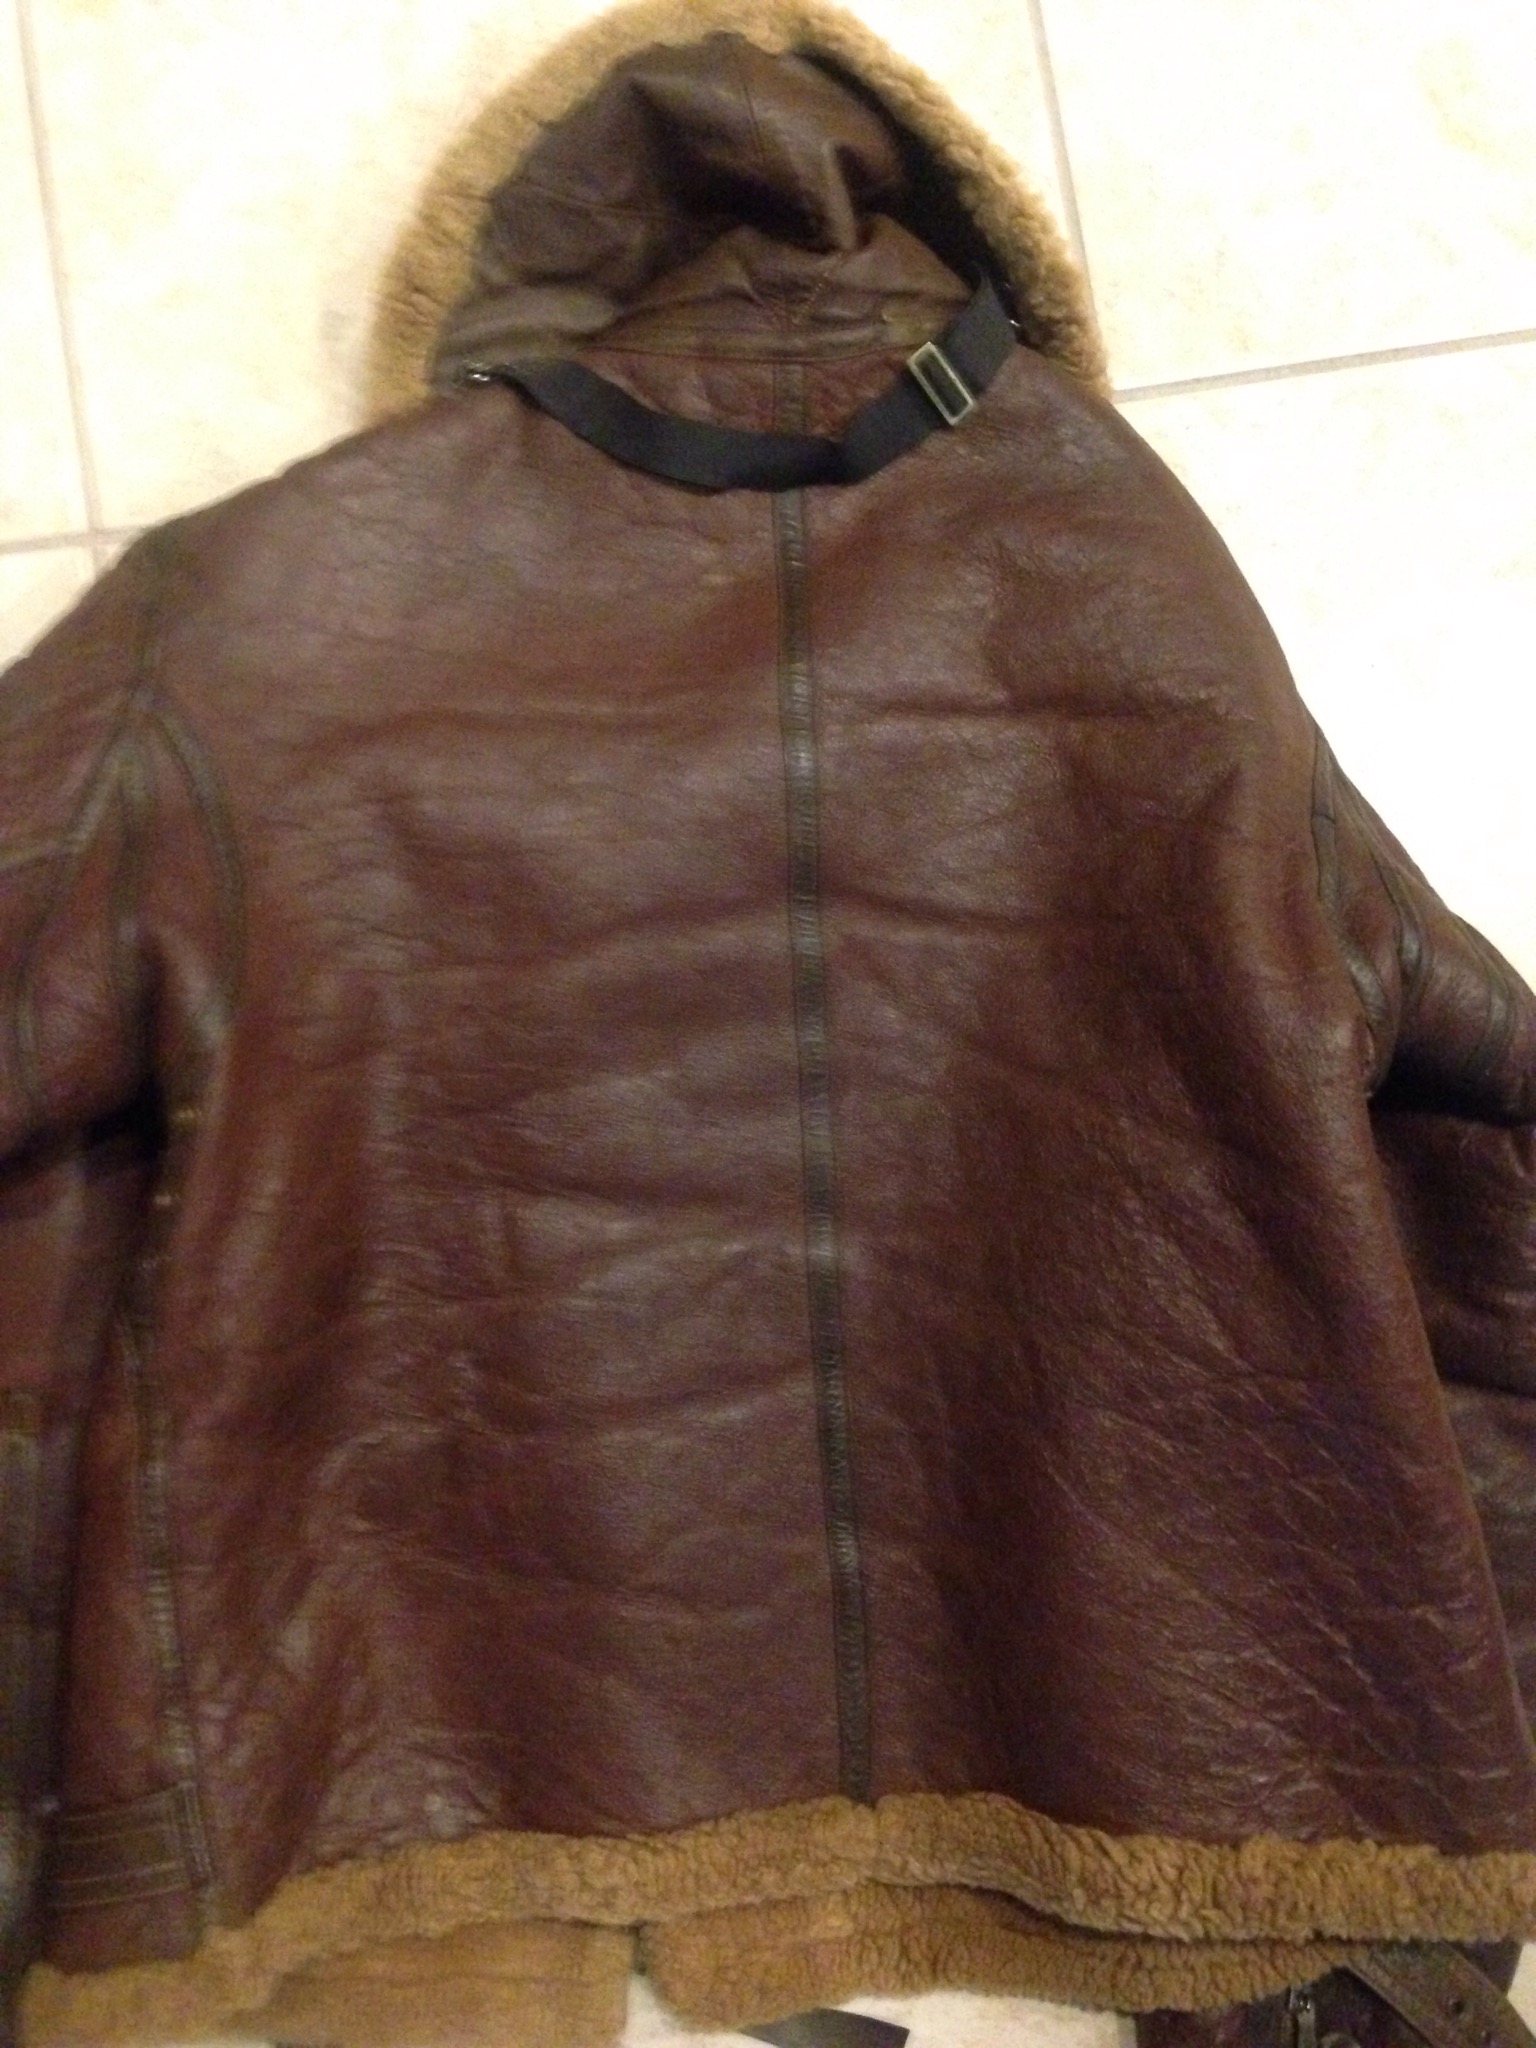 Vintage Jackets | Vintage Leather Jackets Forum